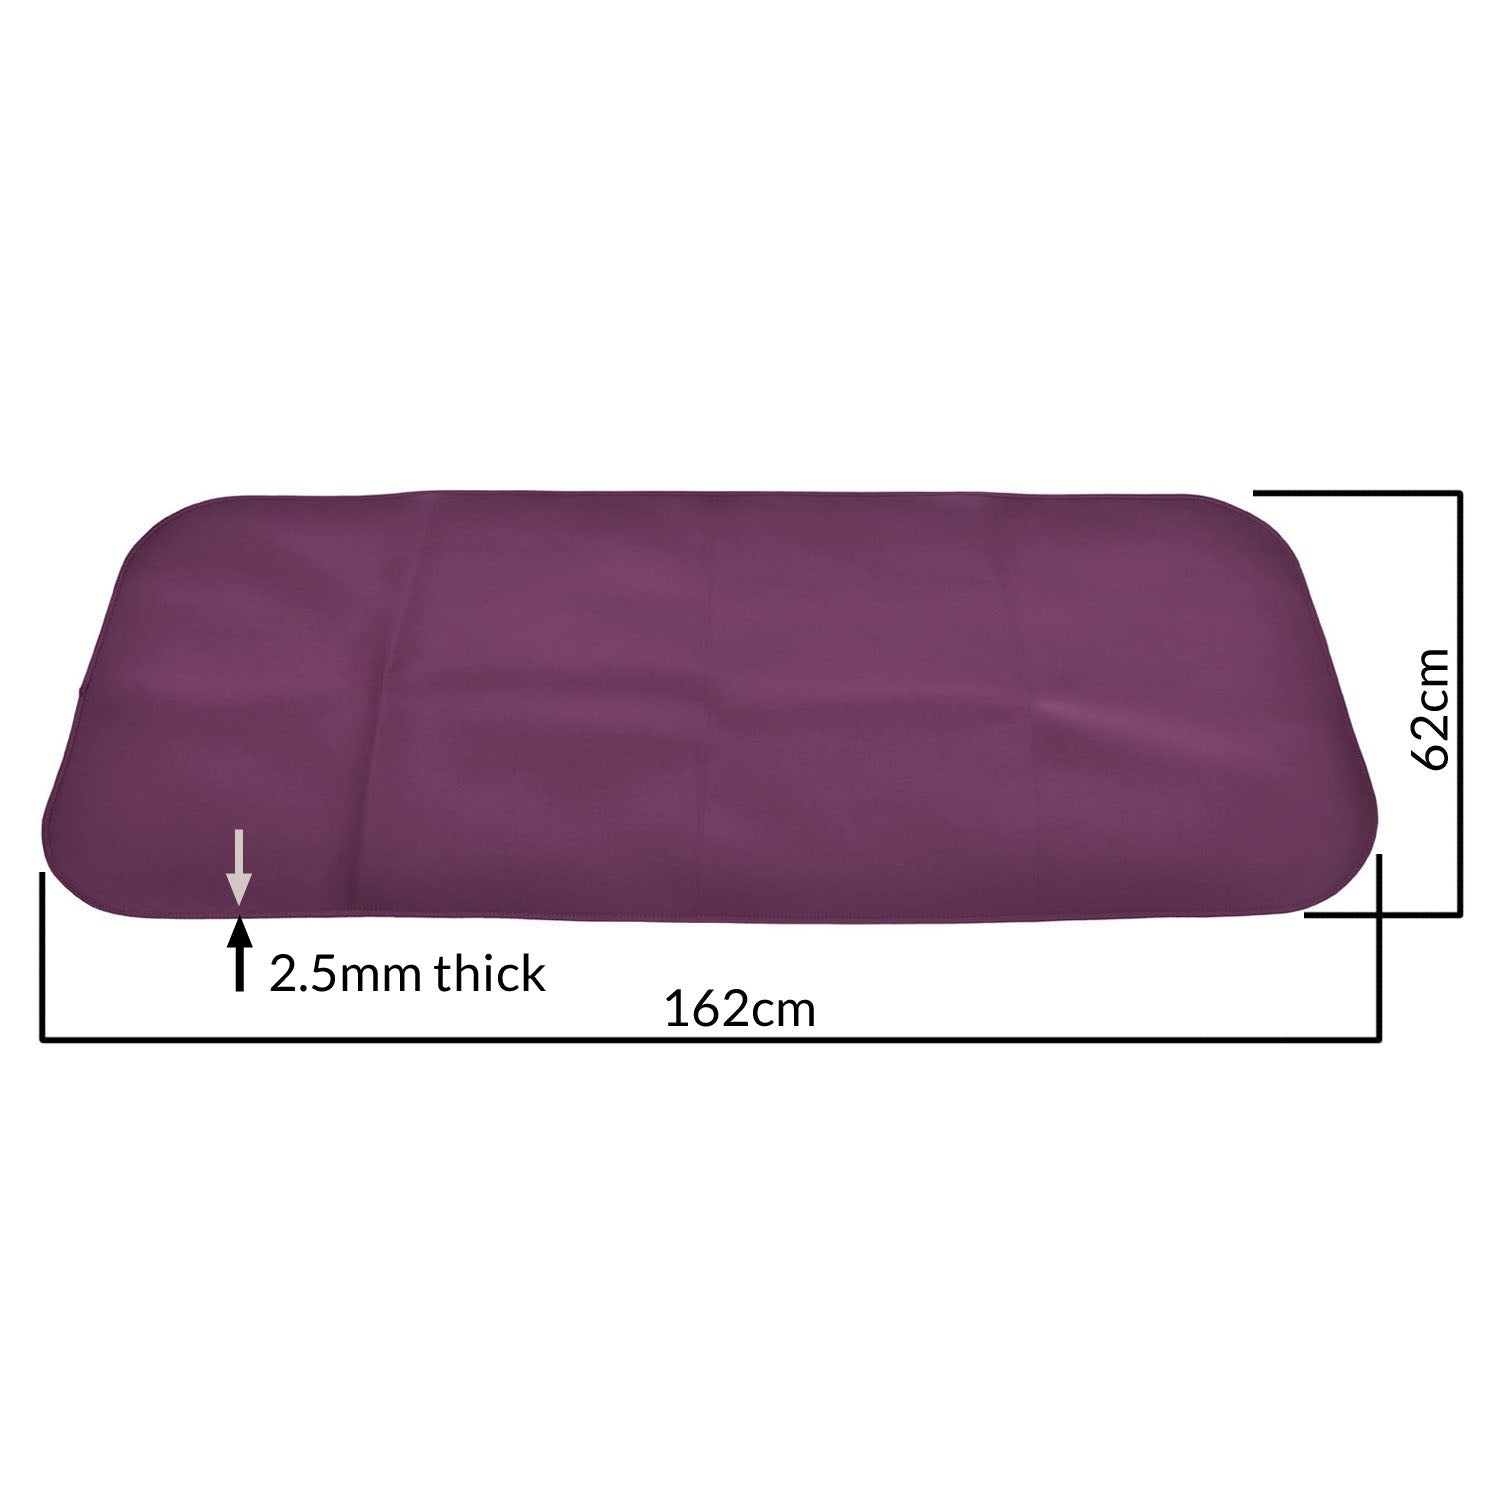 Adult Changing Mat and Waterproof Bag Set - Aubergine/Black (UK VAT Exempt)